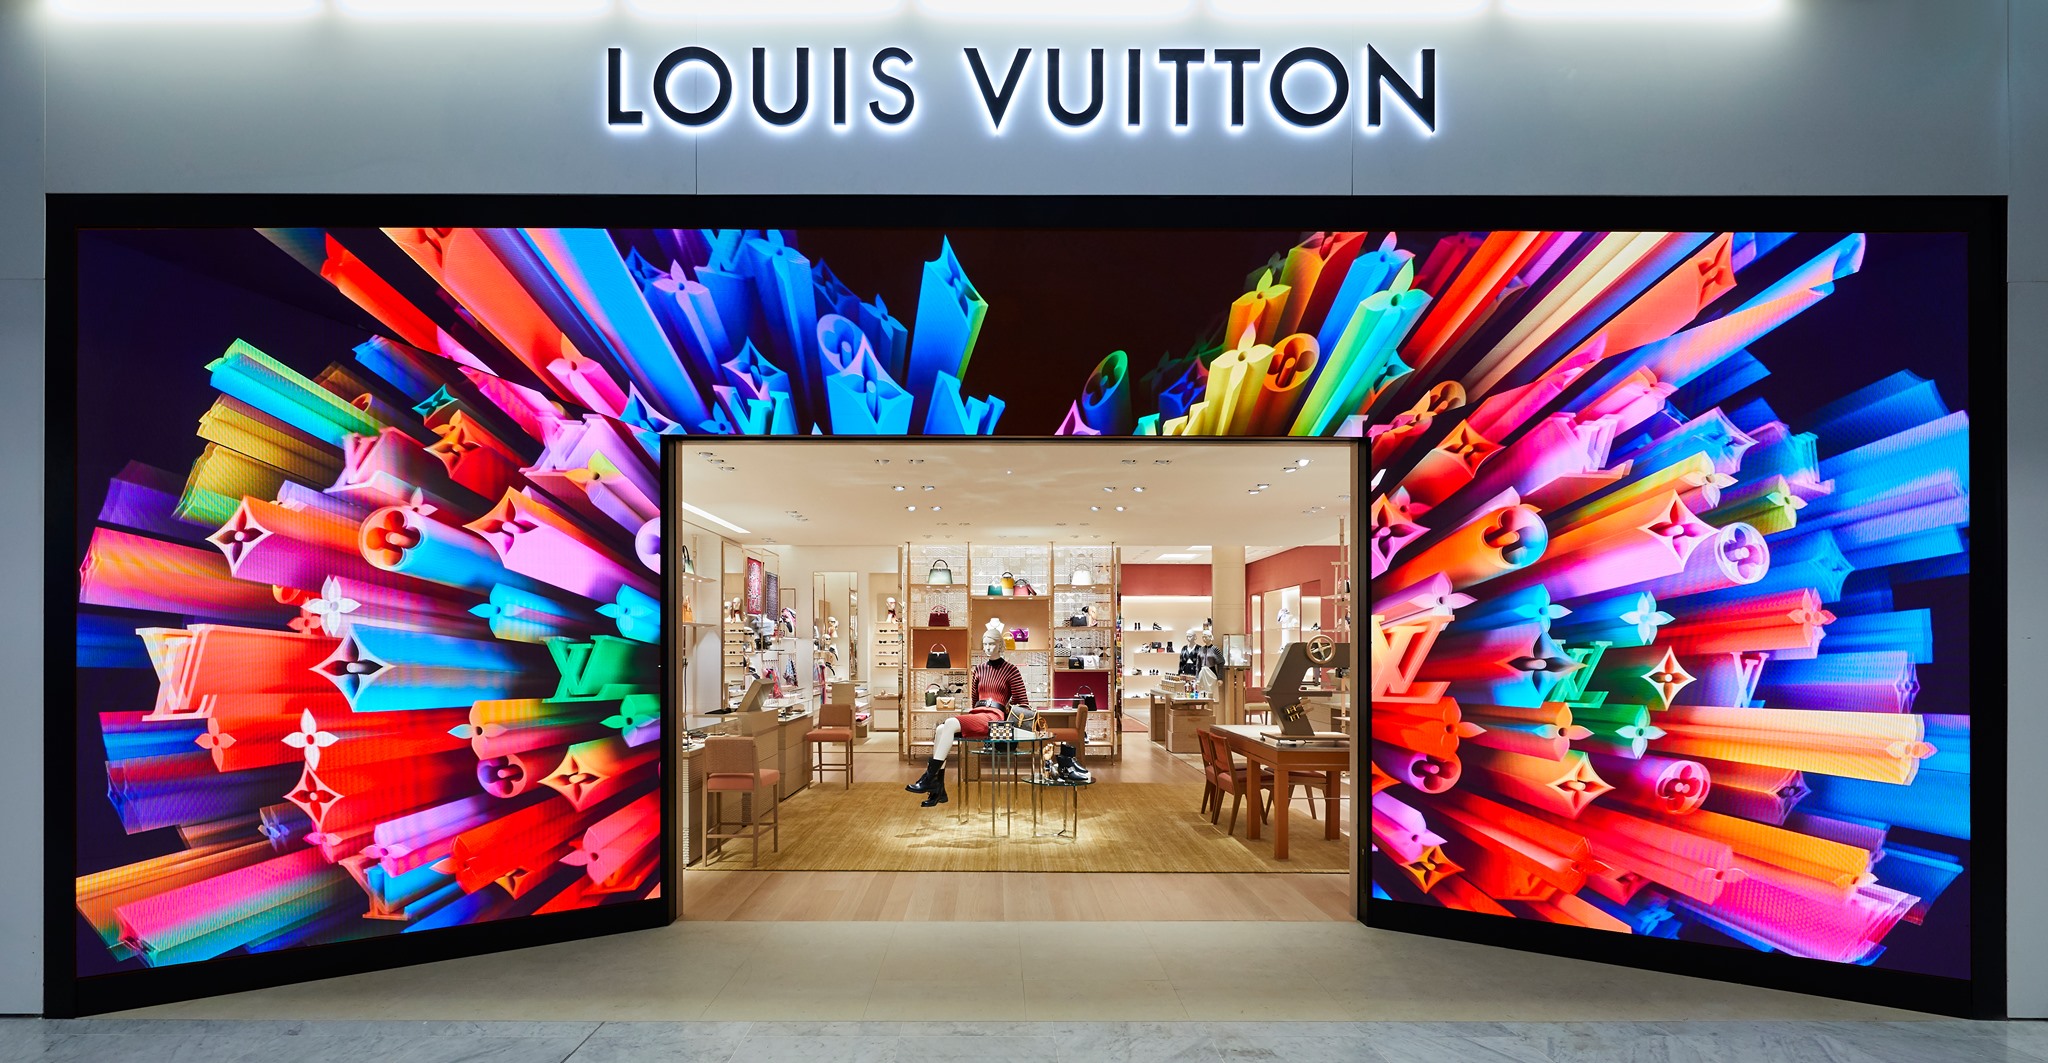 Louis Vuitton Union Square - Handbags & Packs, Luggage, Shoes